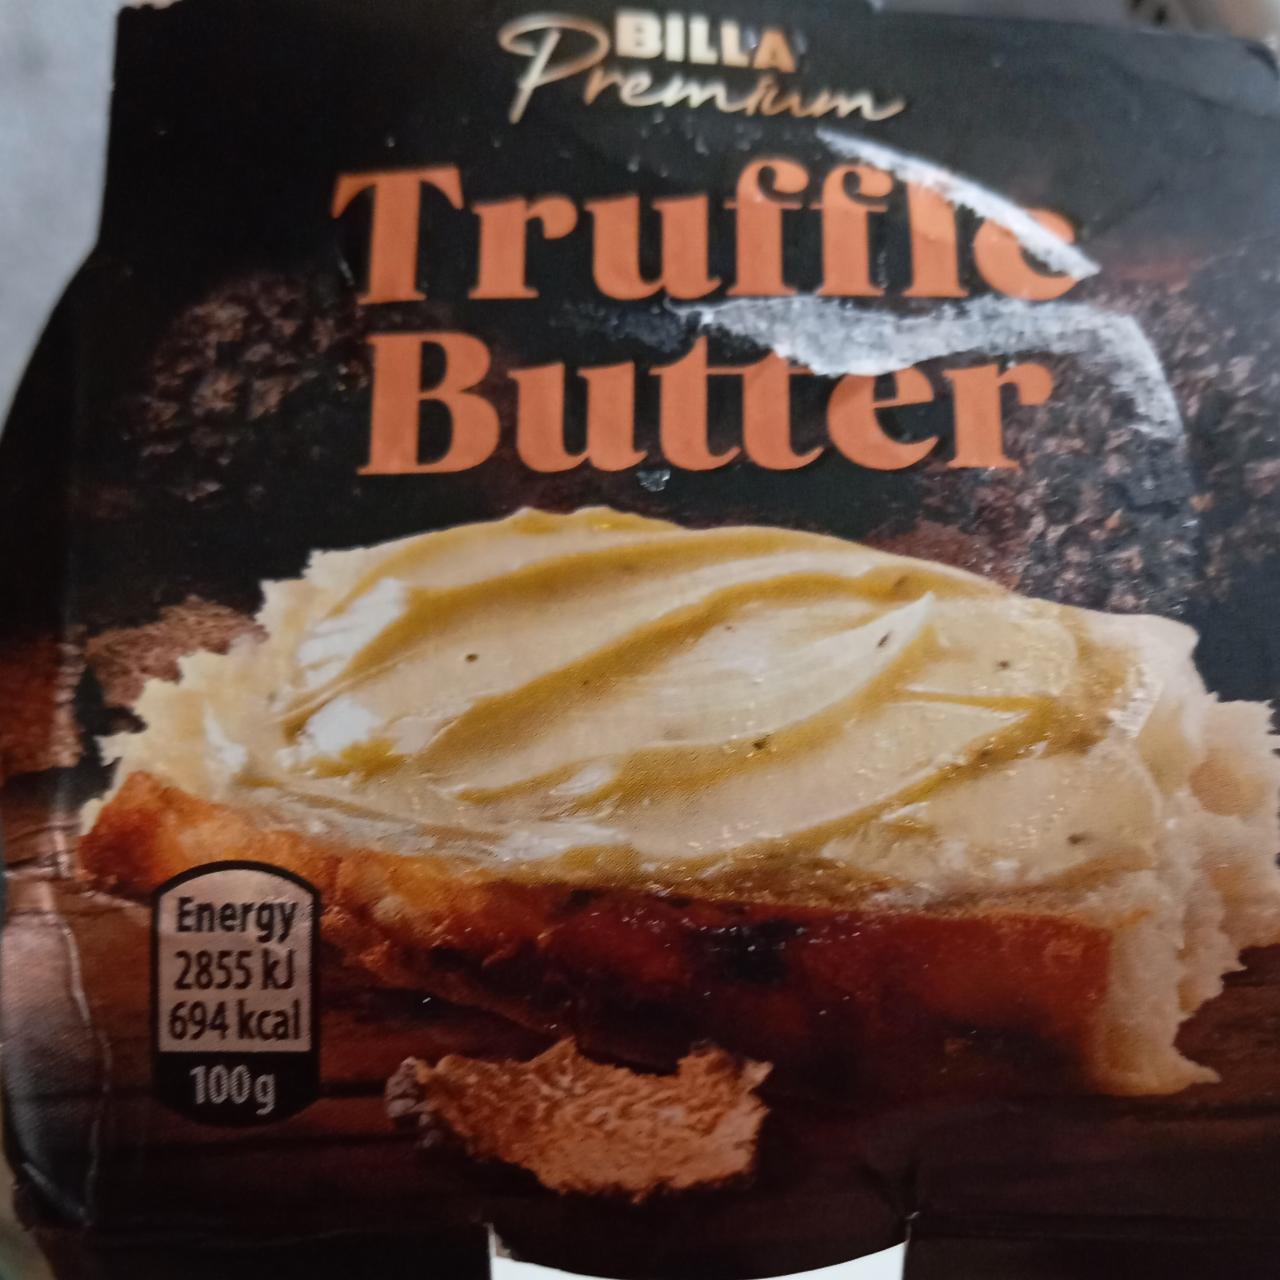 Fotografie - Truffle butter Billa Premium